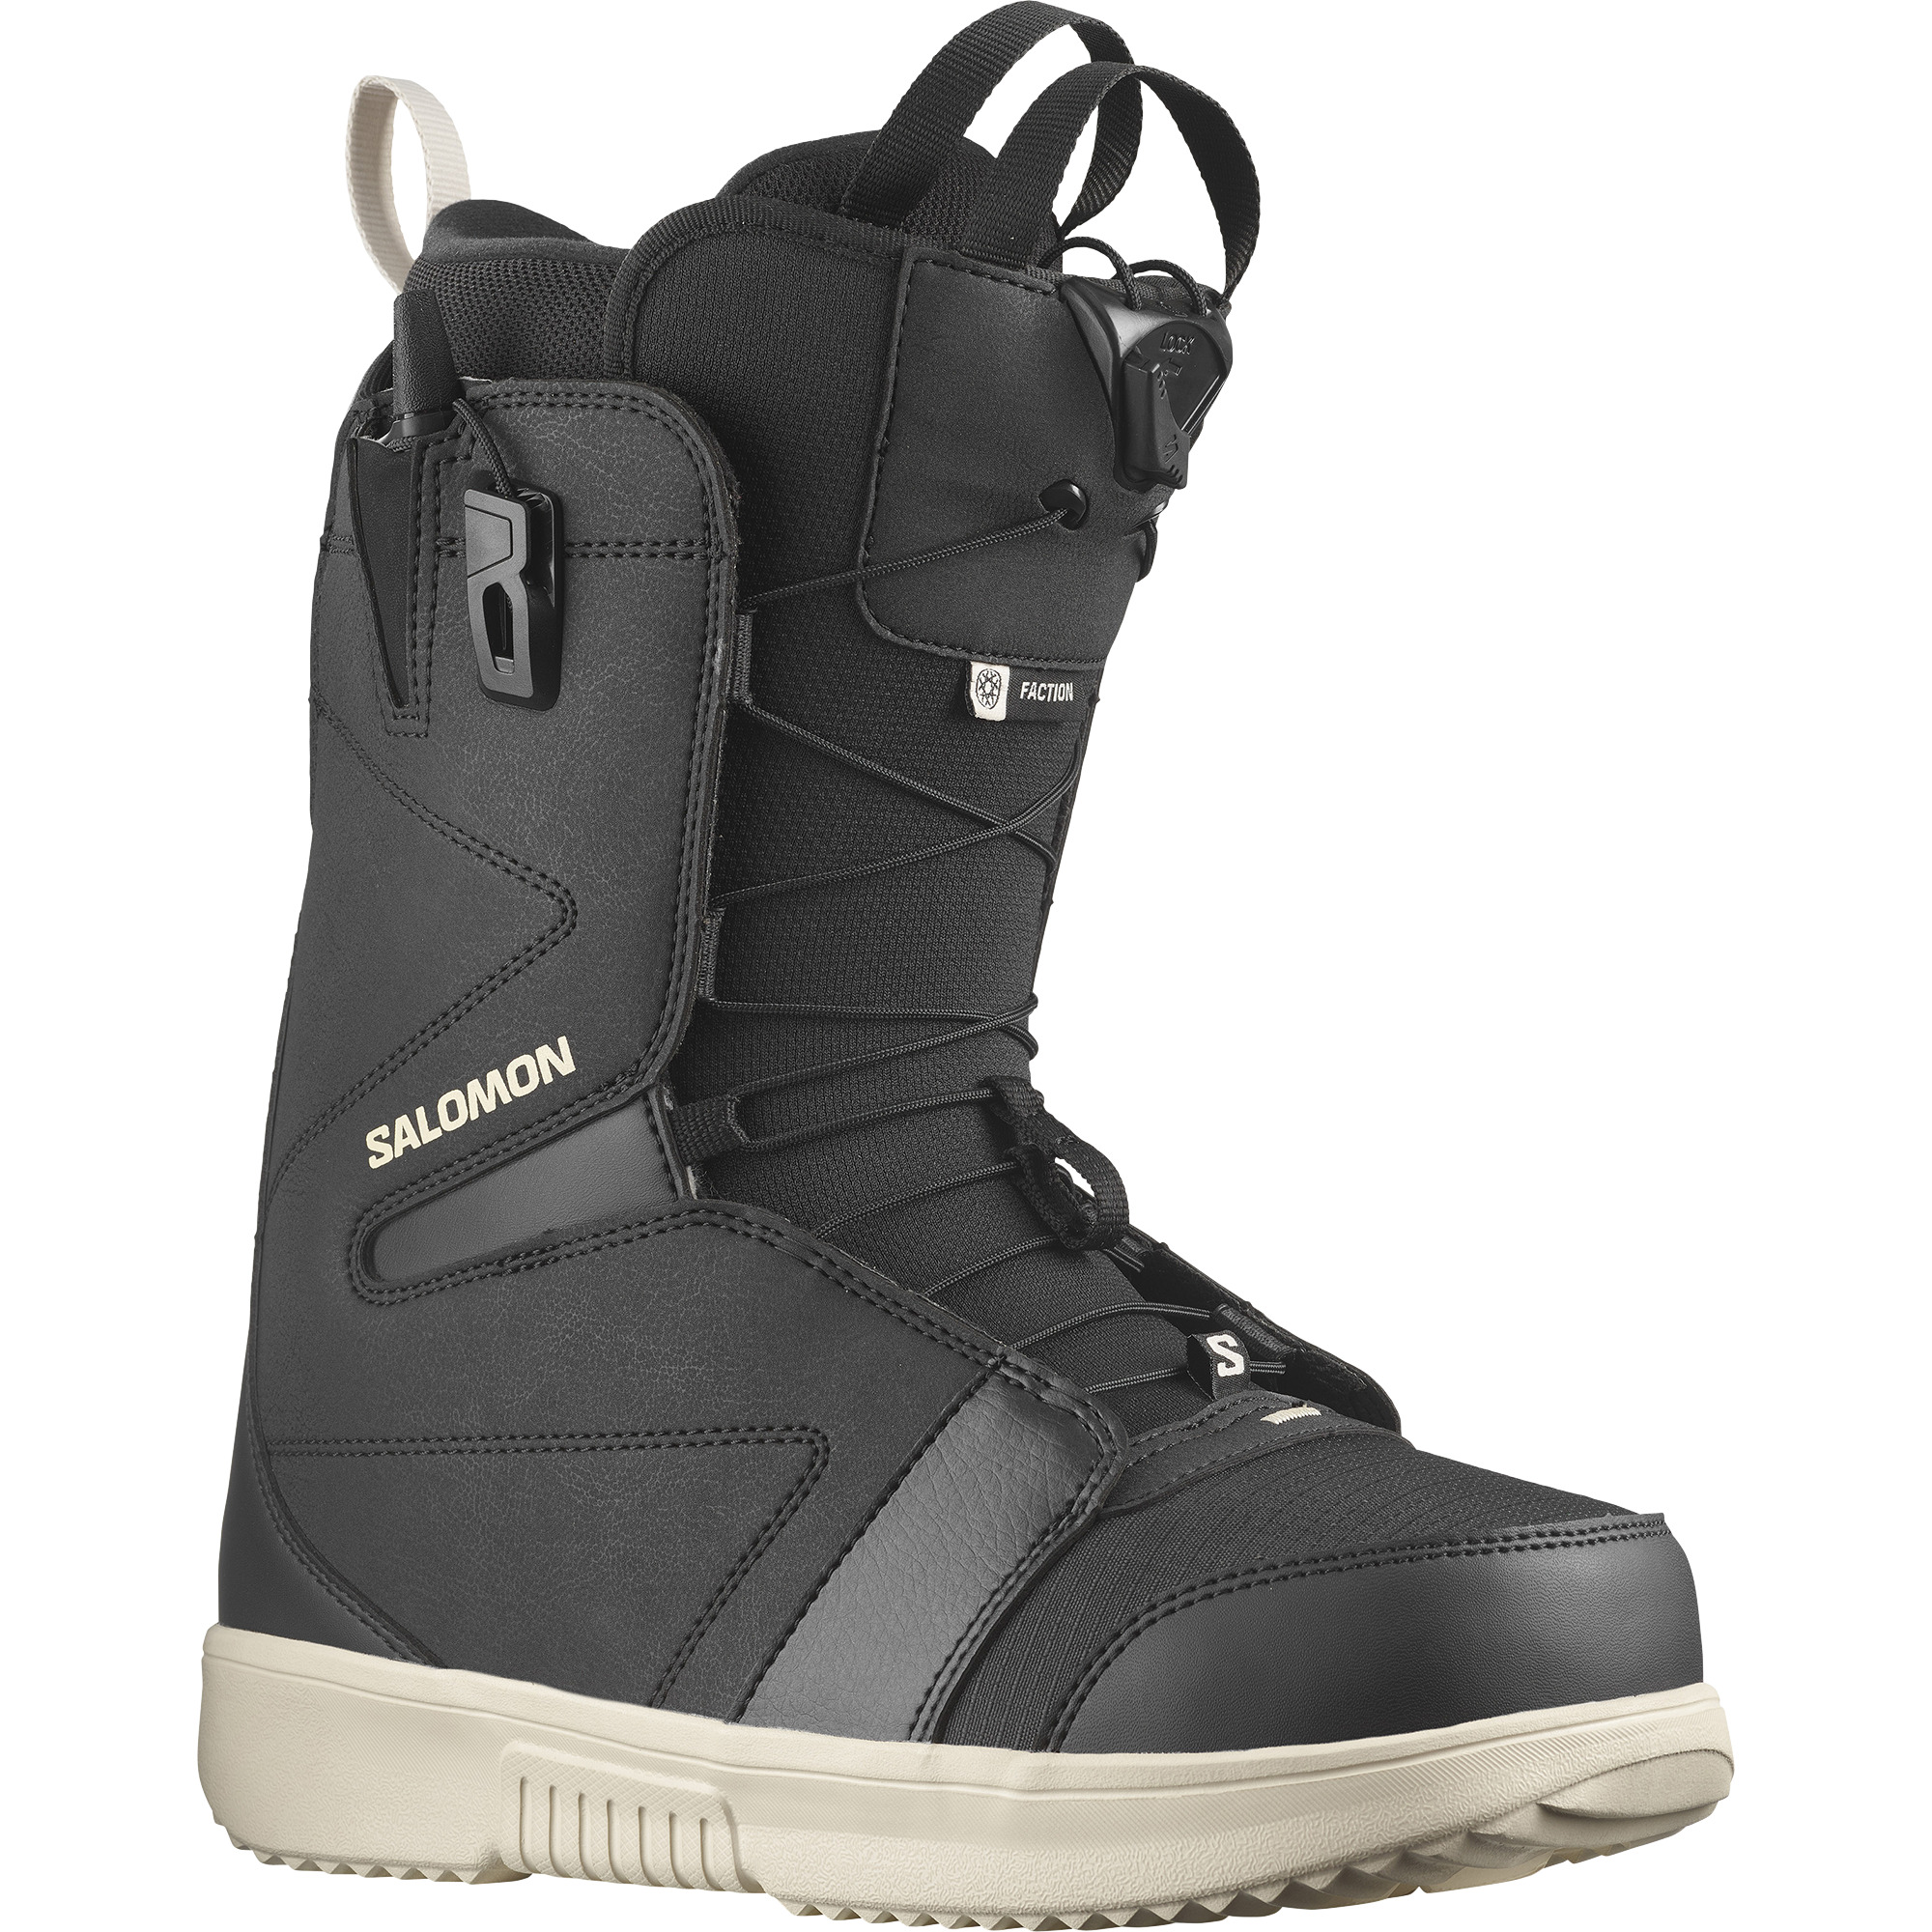 Salomon Faction Men's Snowboard Boots